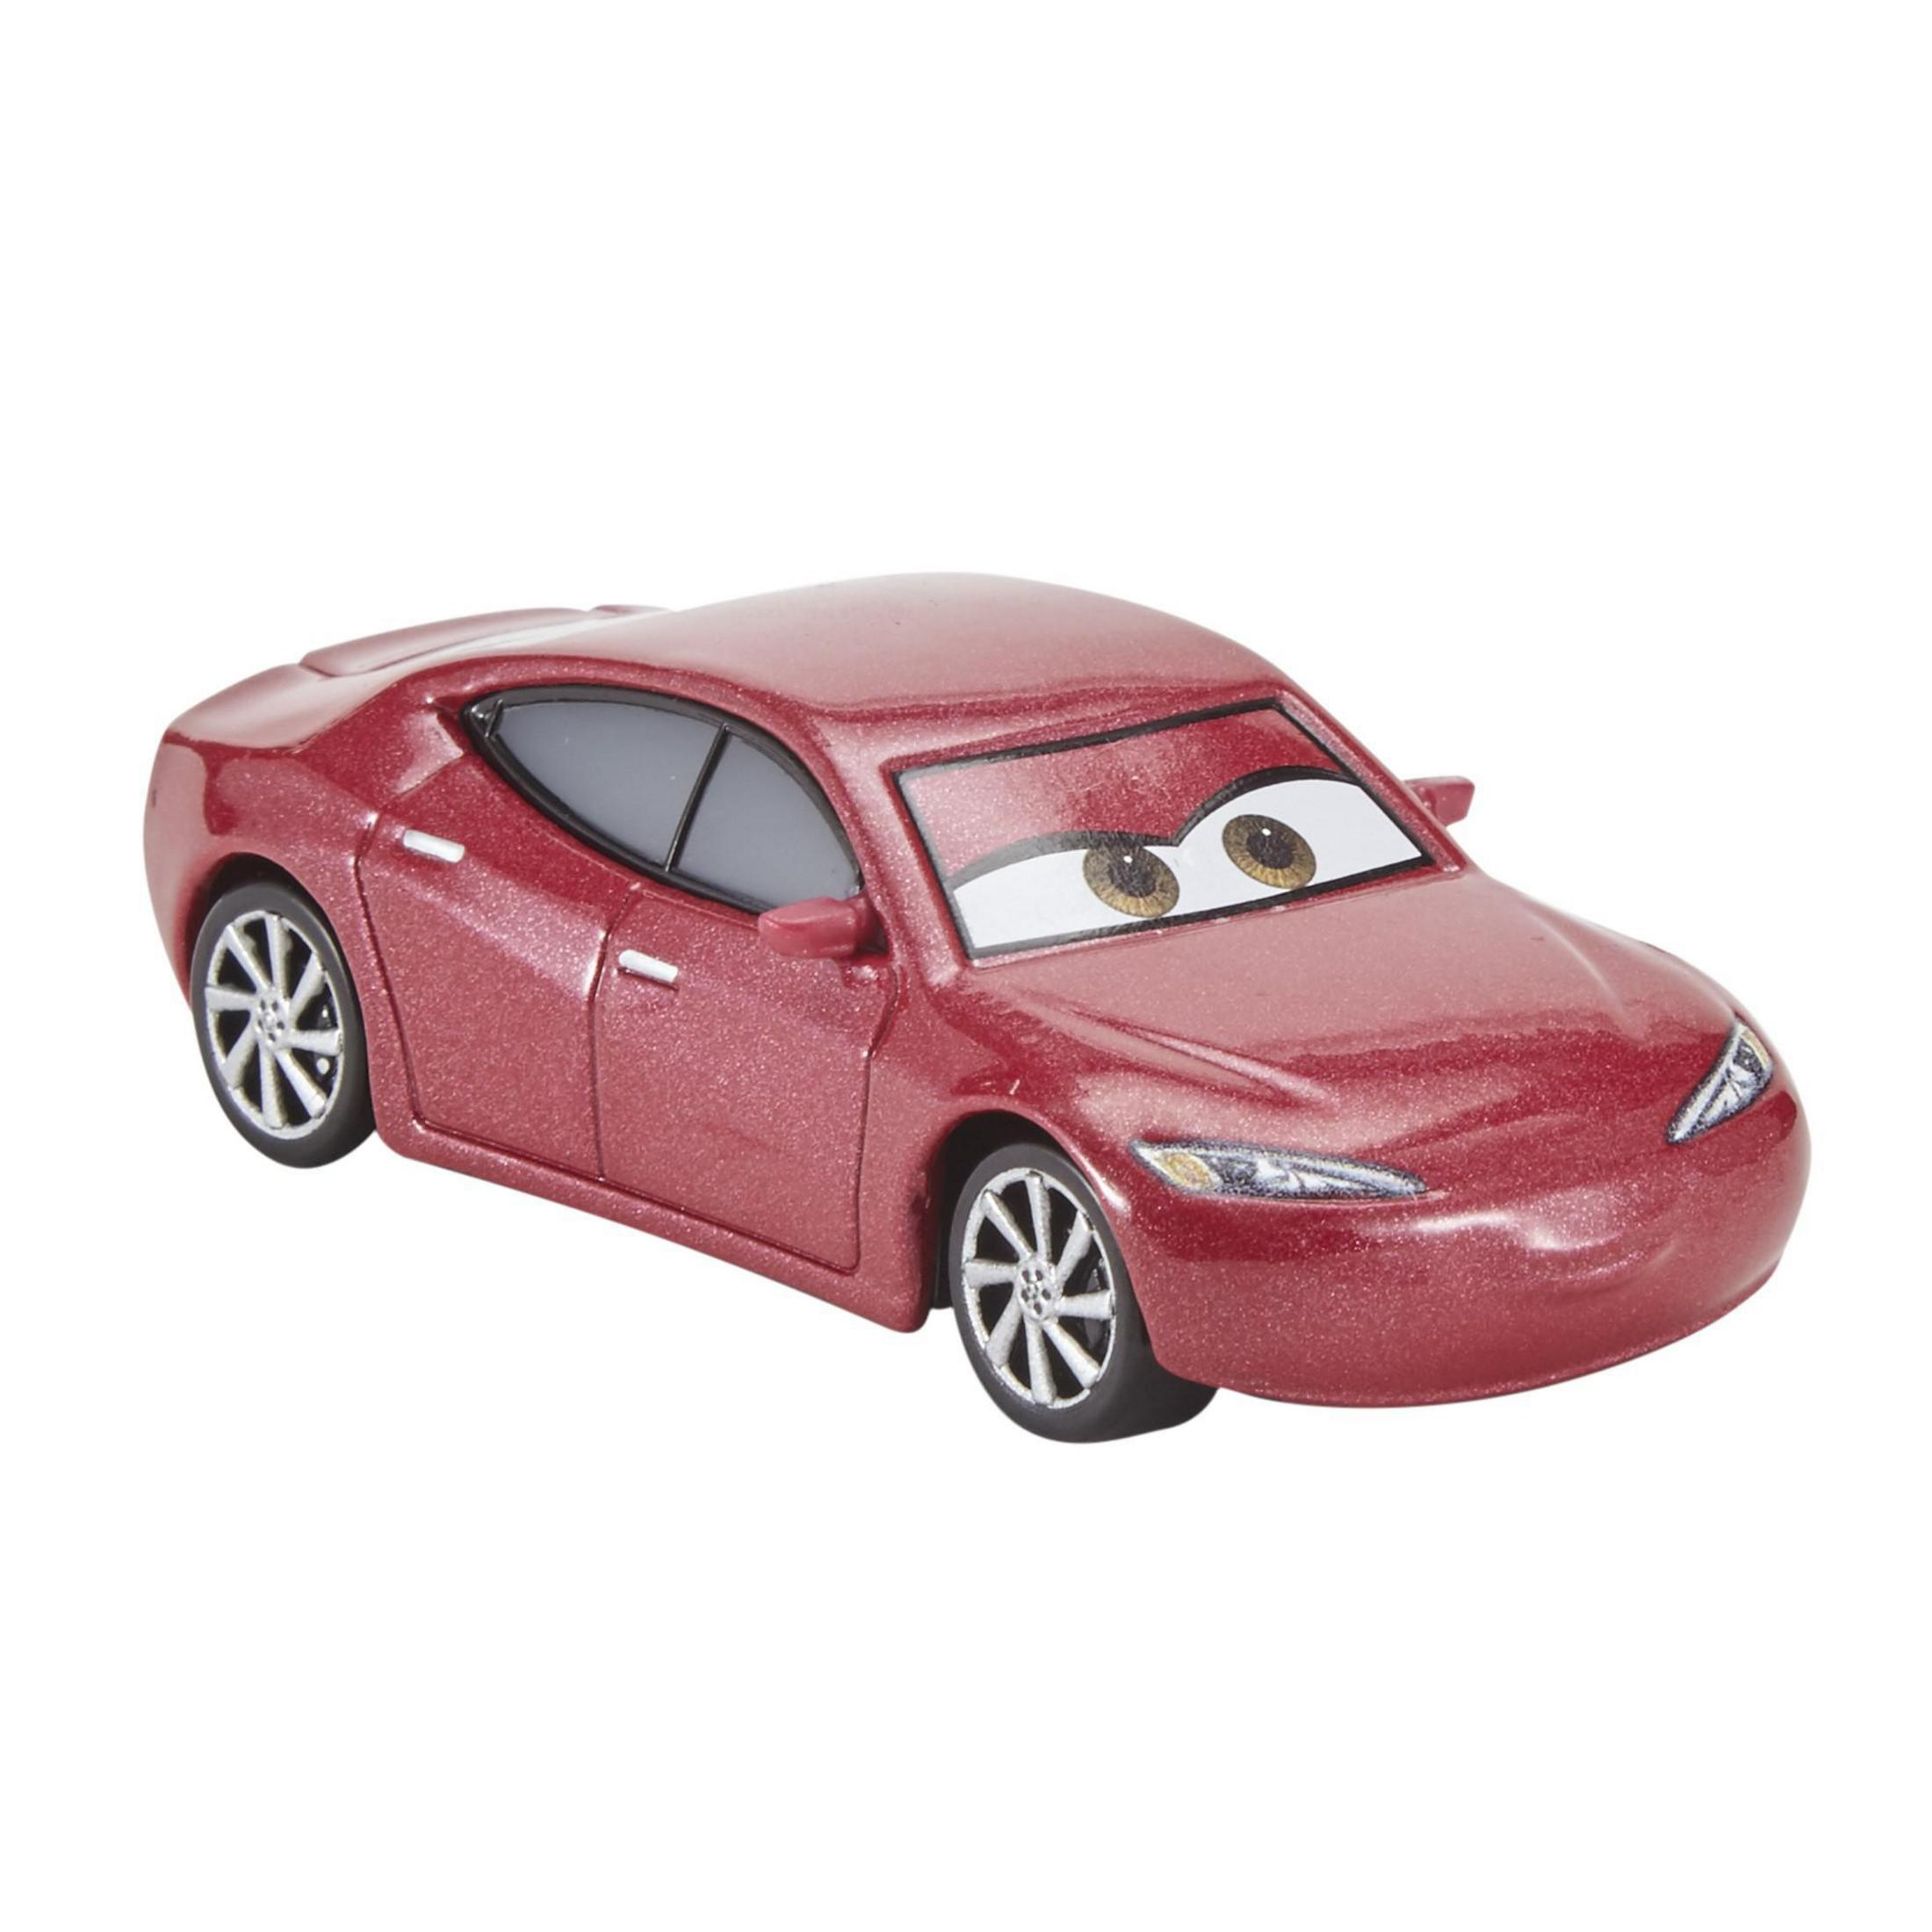 CARS DIE-CAST SORT FAHRZEUG Mehrfarbig CHARACTER GXG41 Spielzeugauto